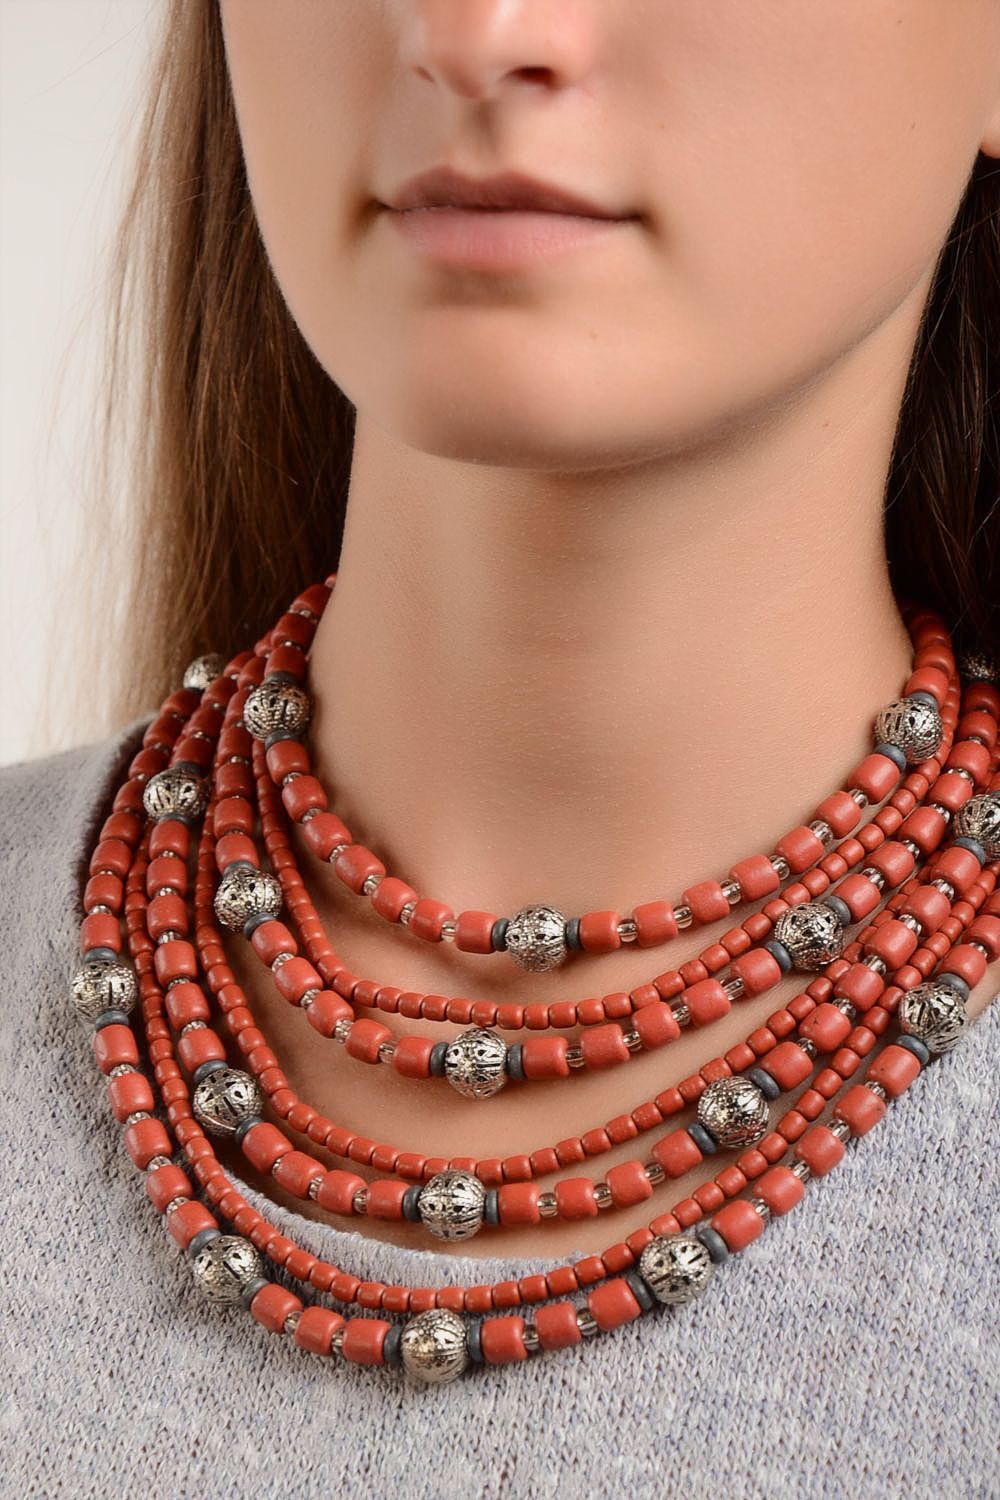 Handmade necklace bead necklace ethnic jewellery ceramic jewelry fashion jewelry photo 1